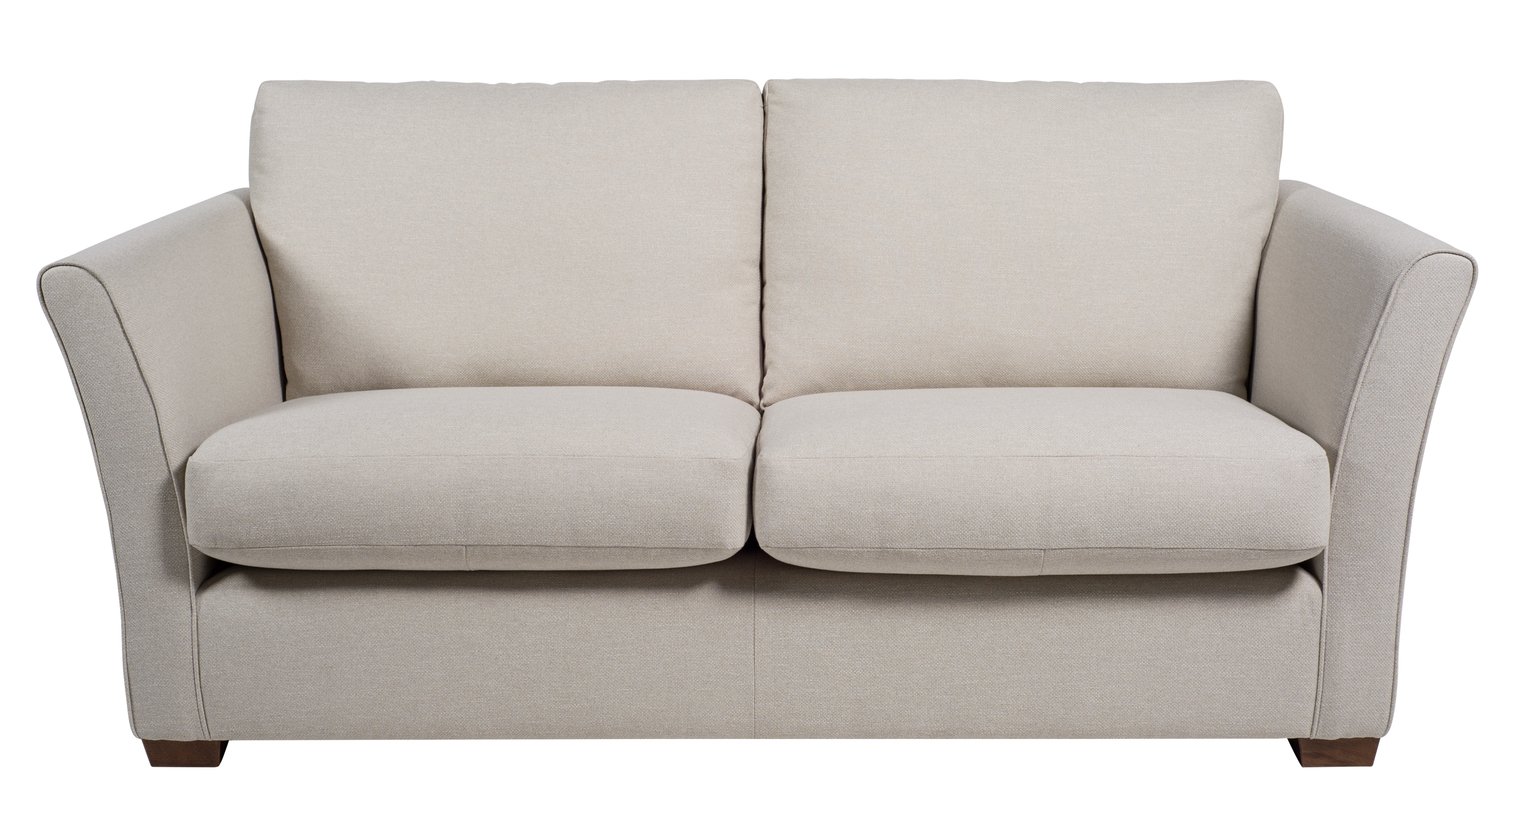 Argos Home Dawson 3 Seater Fabric Sofa - Natural